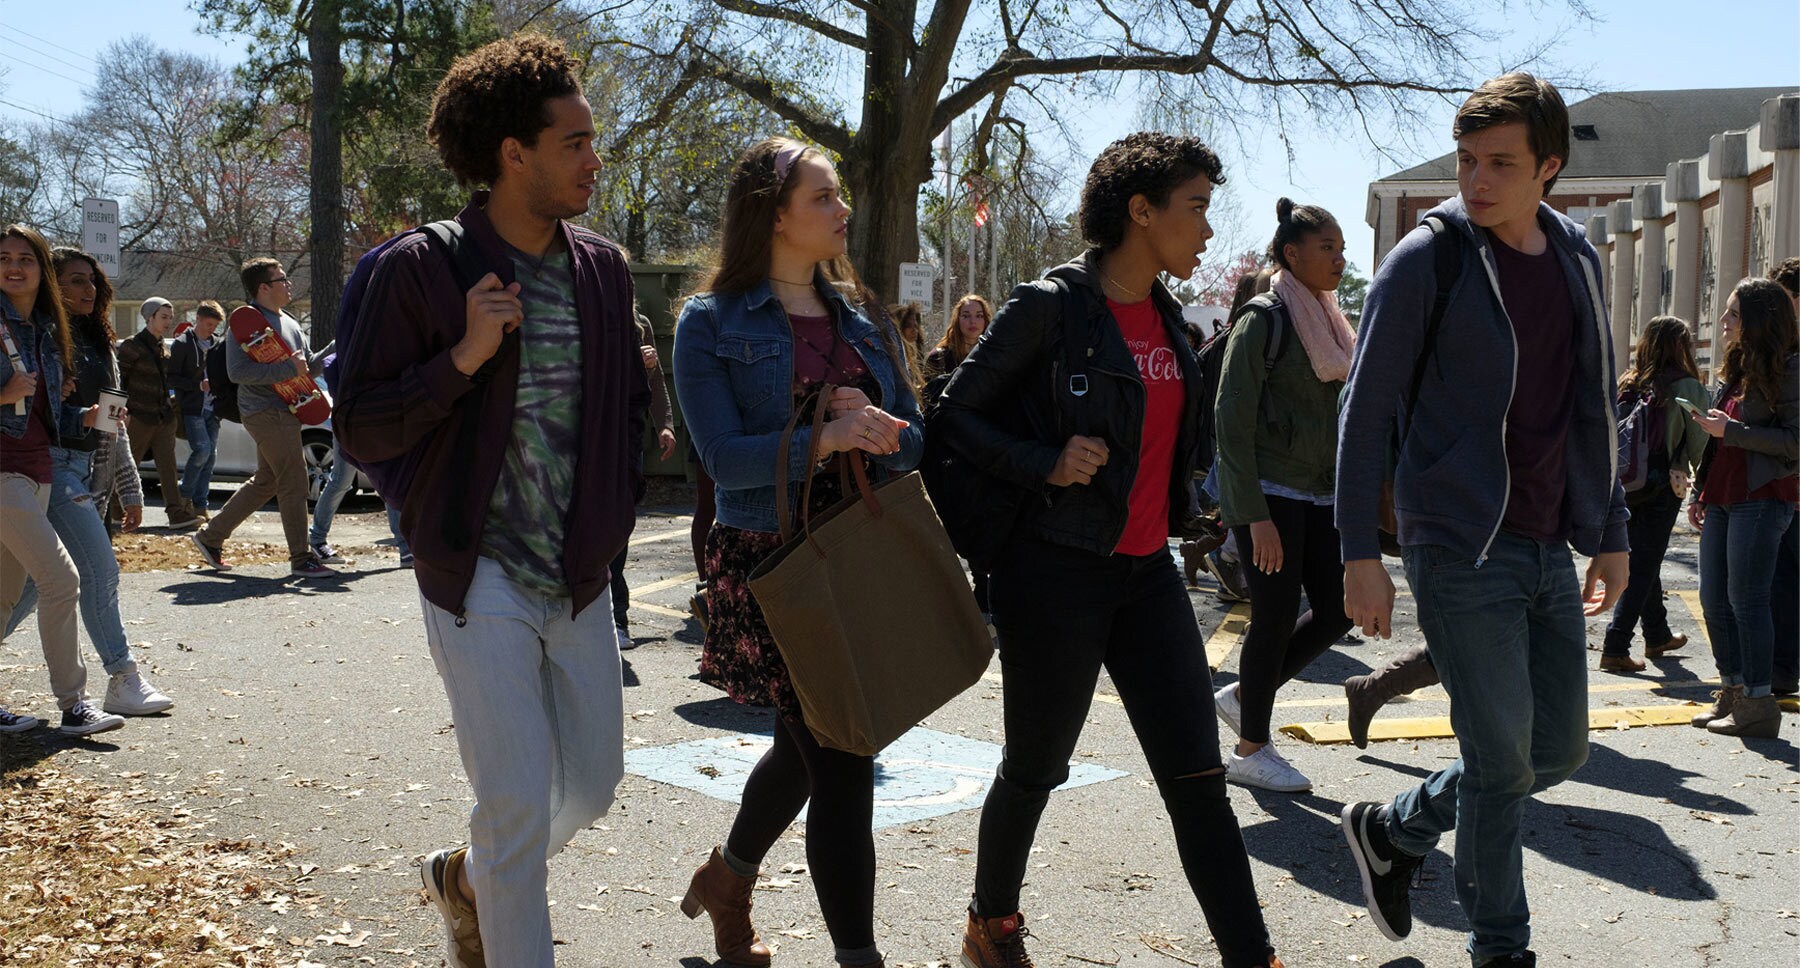 Alexandra Shipp (as Abby), Nick Robinson (as Simon), Jorge Lendeborg Jr. (as Nick),and Katherine Langford (as Leah) walking to school in Love, Simon